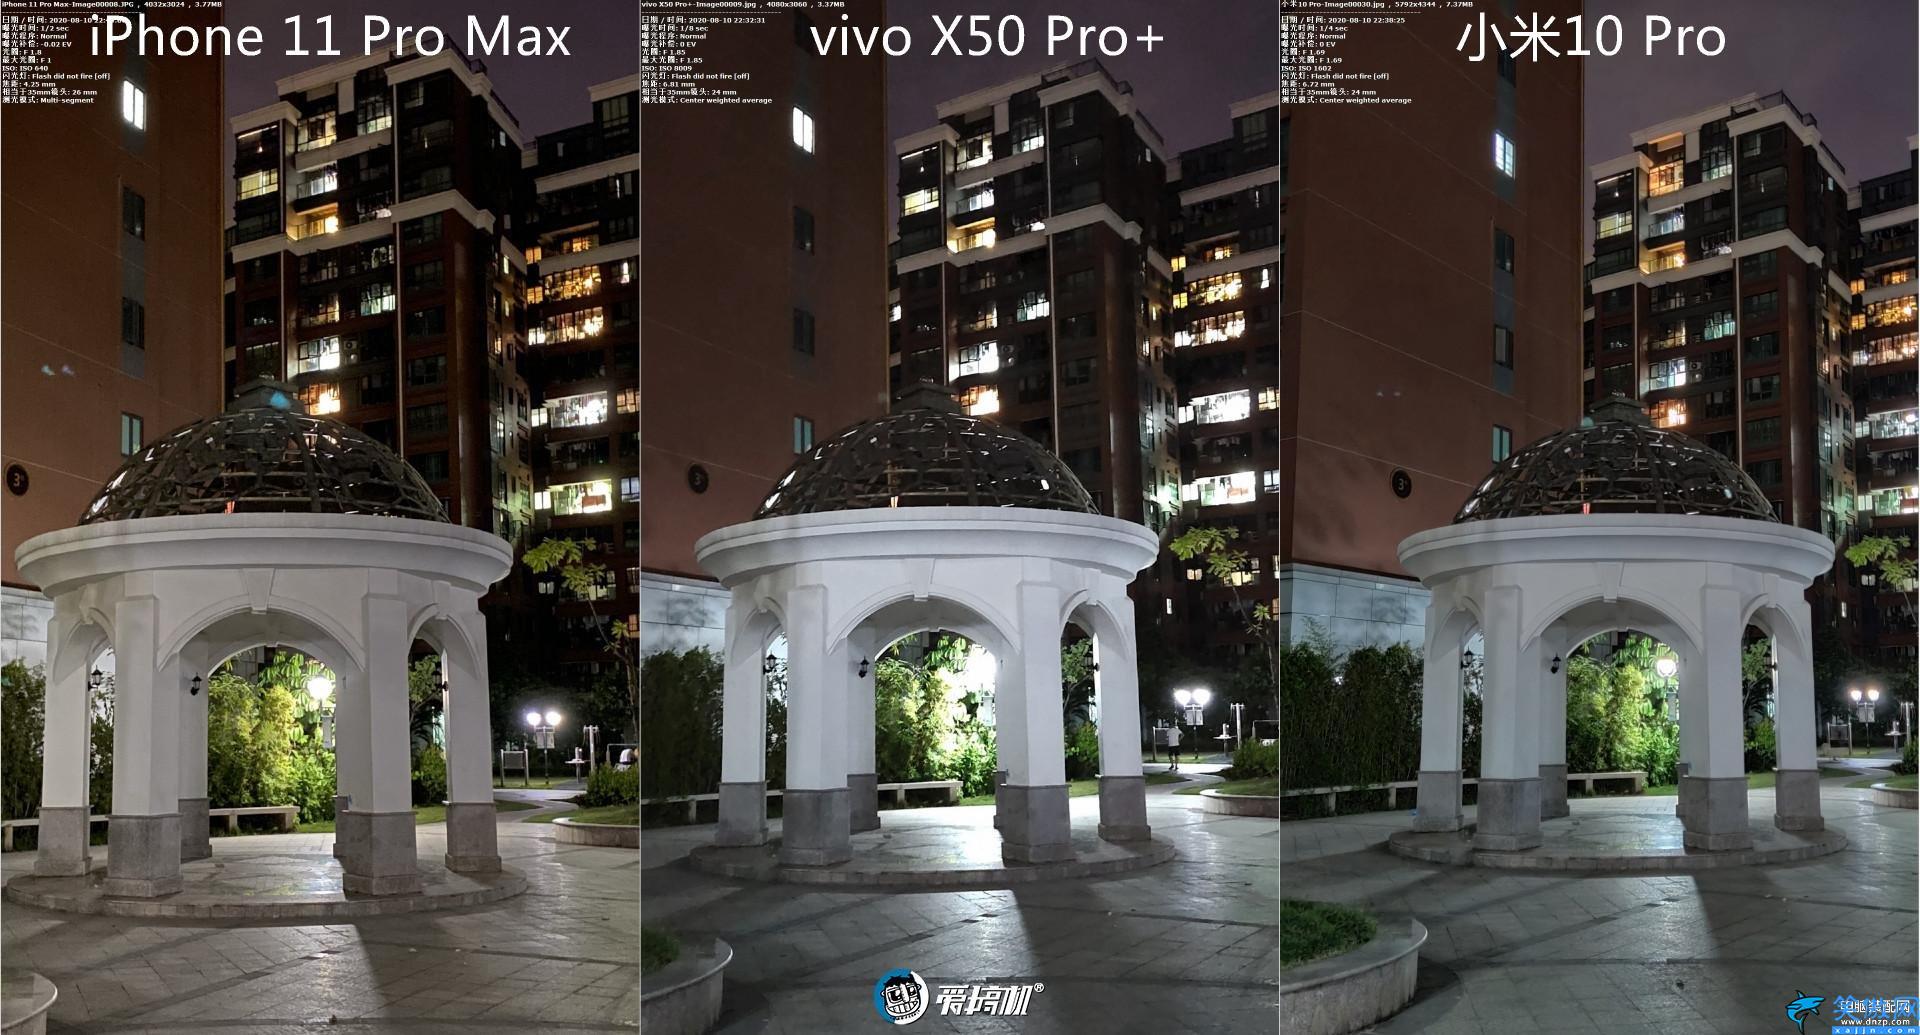 x50pro+的配置详细参数,vivo X50 Pro+评测